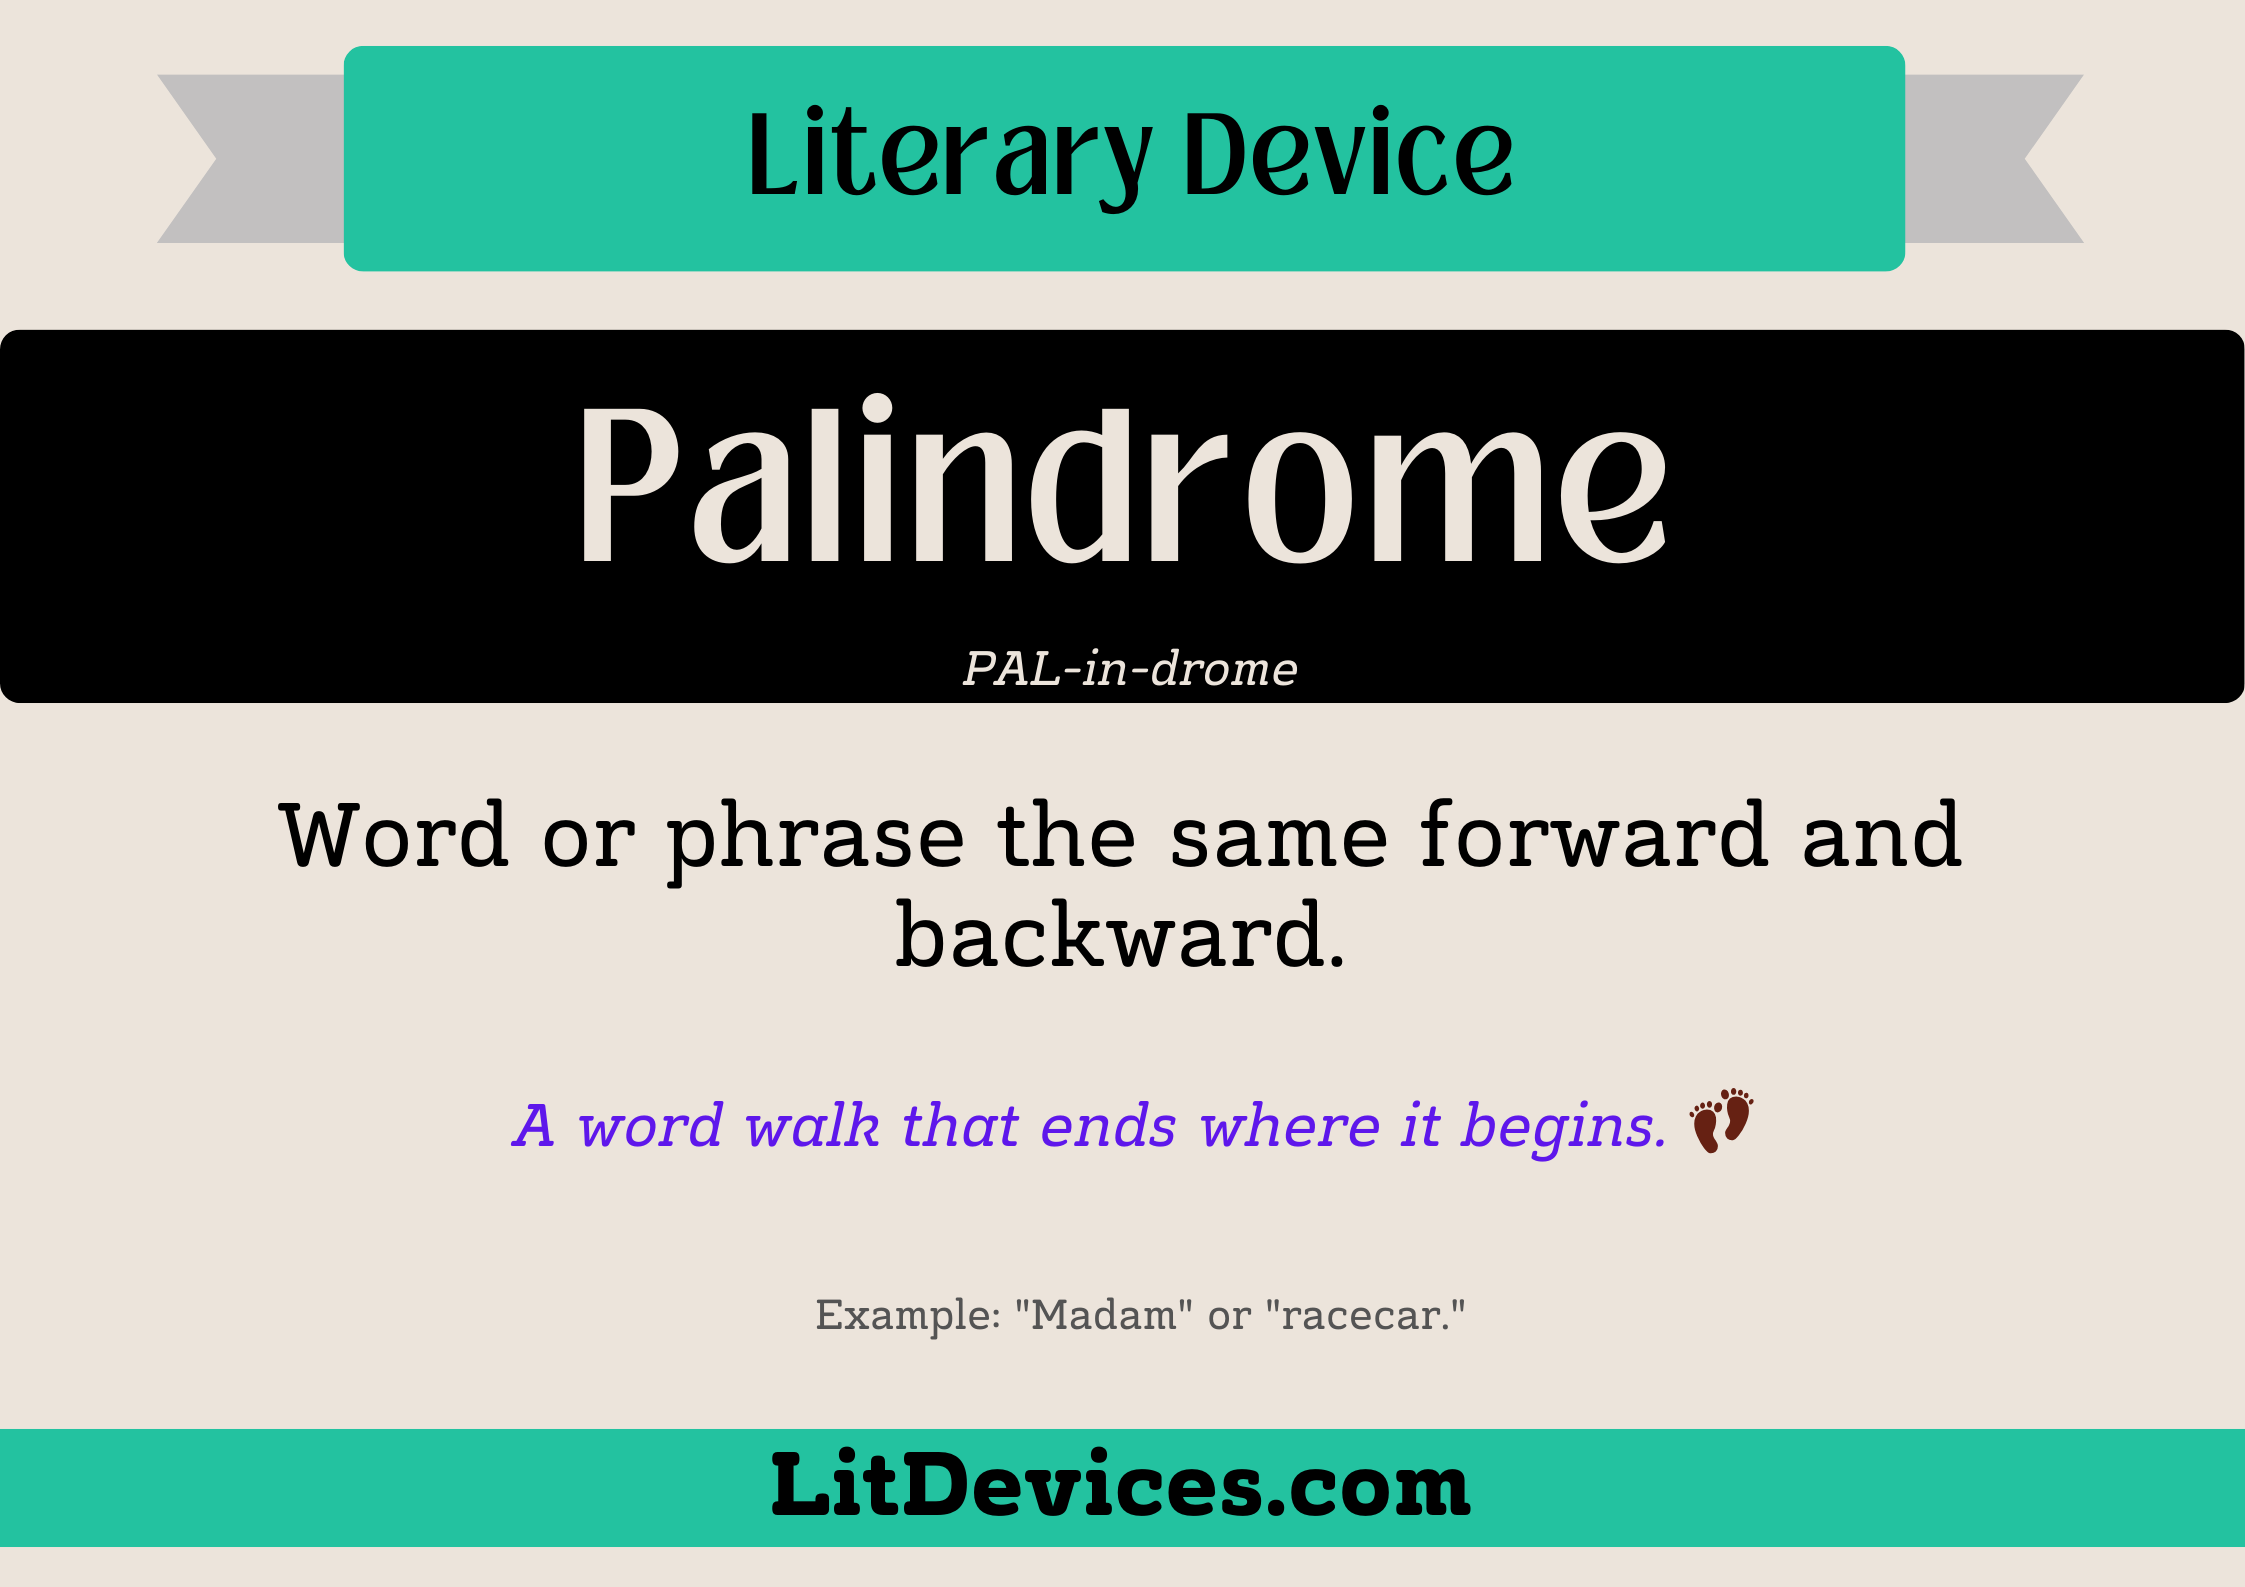 palindrome literary device